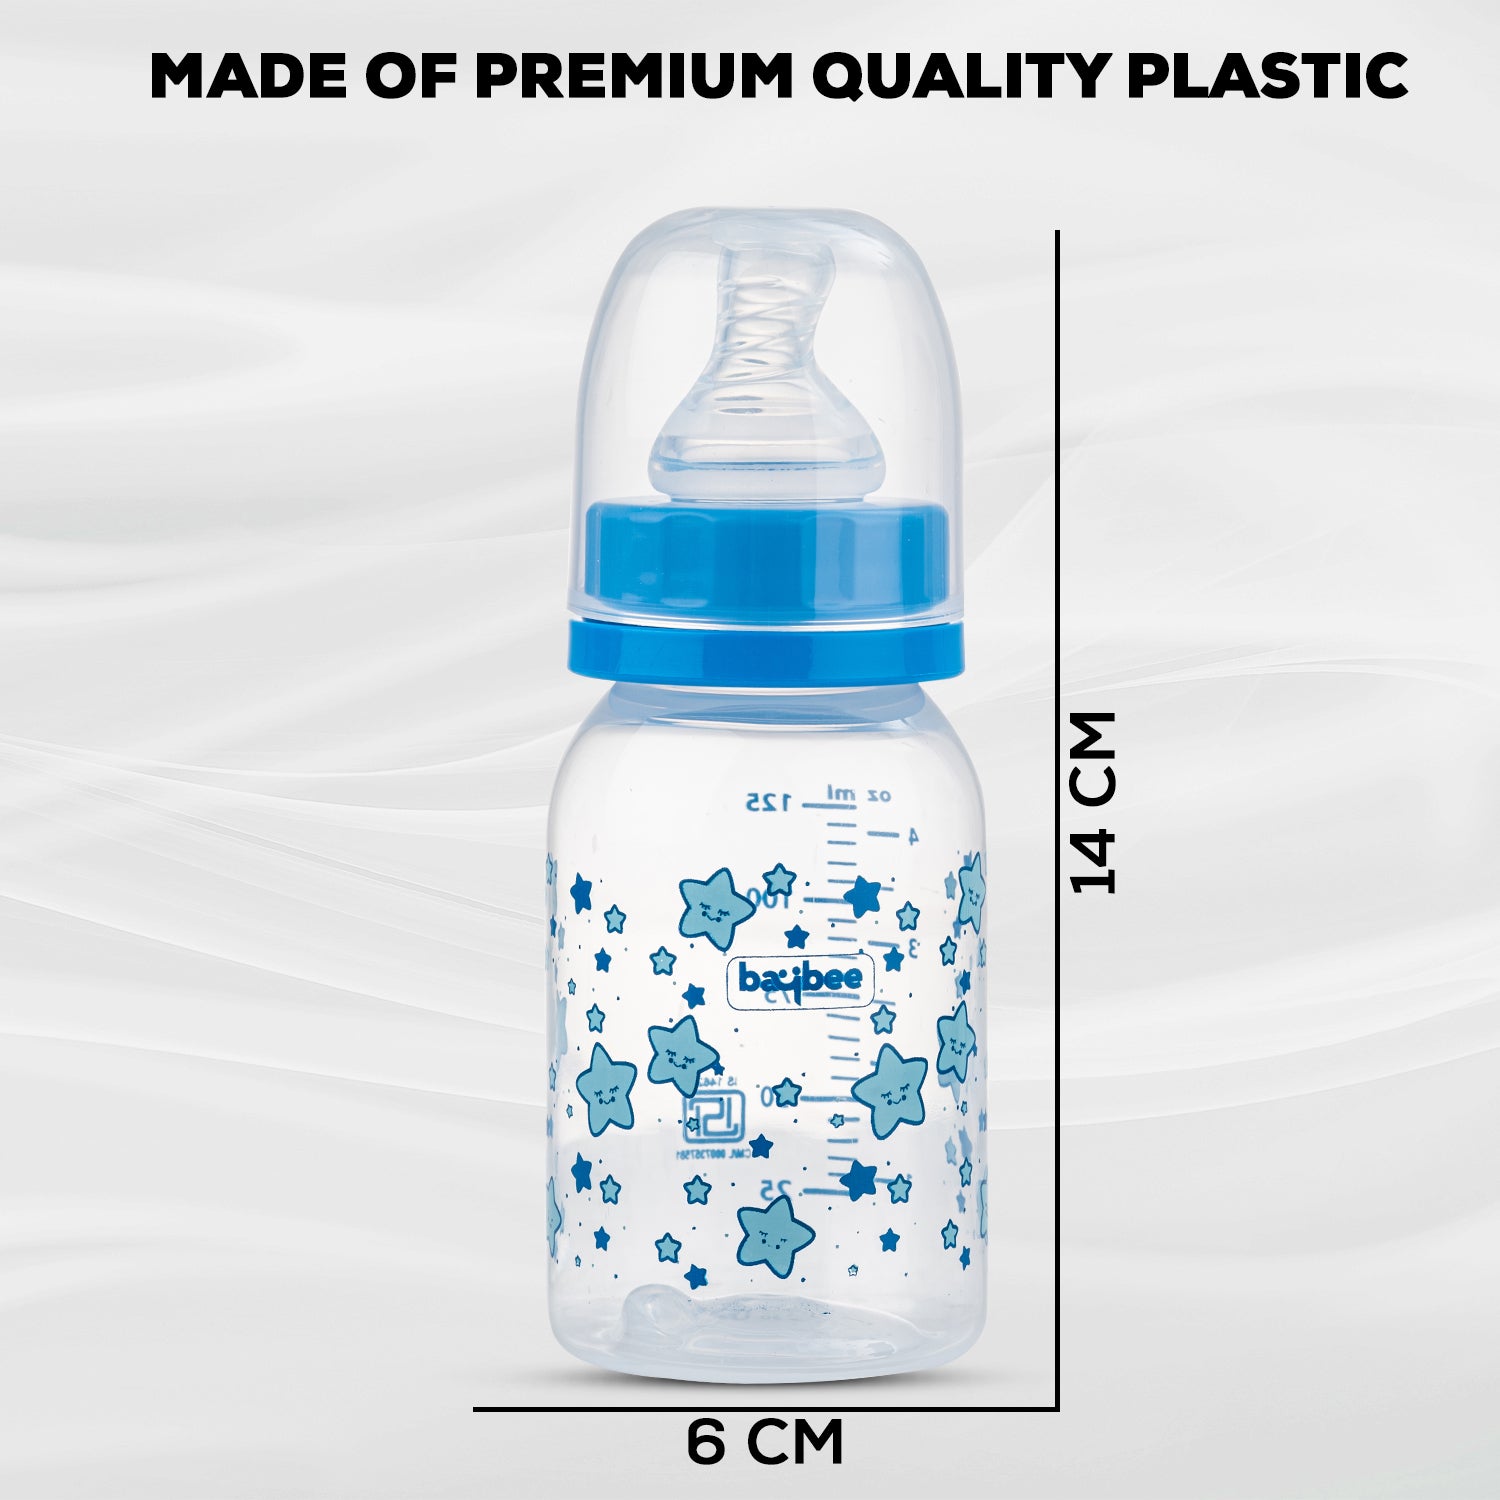 Leak Proof Anti Colic Feeding Bottle  - Slim - 125ML - 3M+ (Green) - The Minikin Store